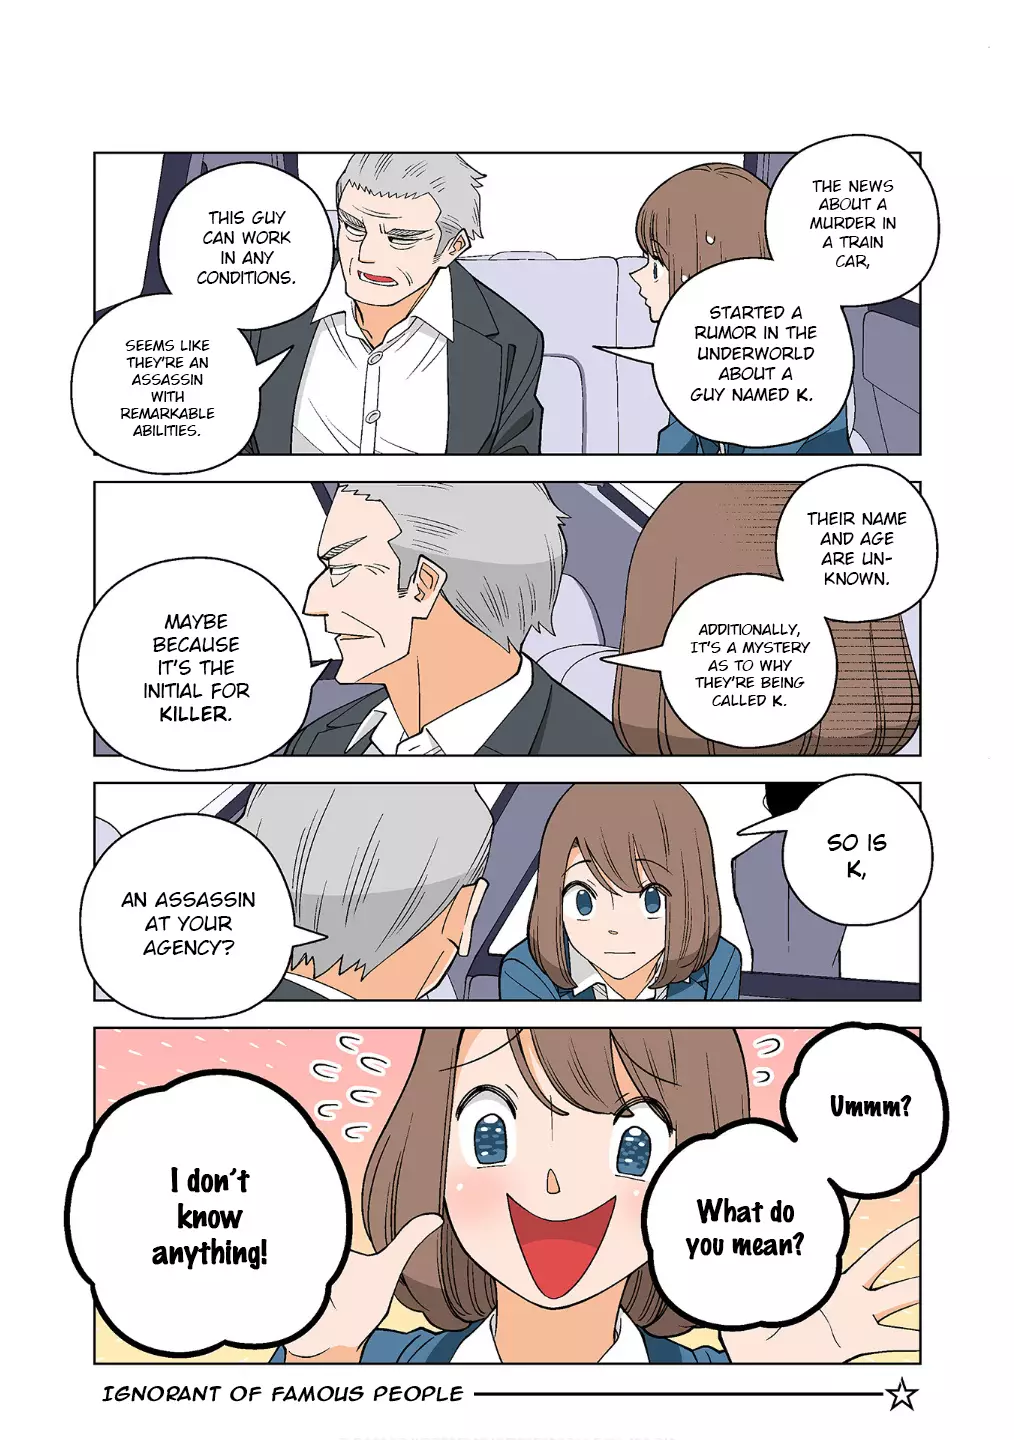 Kanako's Life As An Assassin - 13 page 3